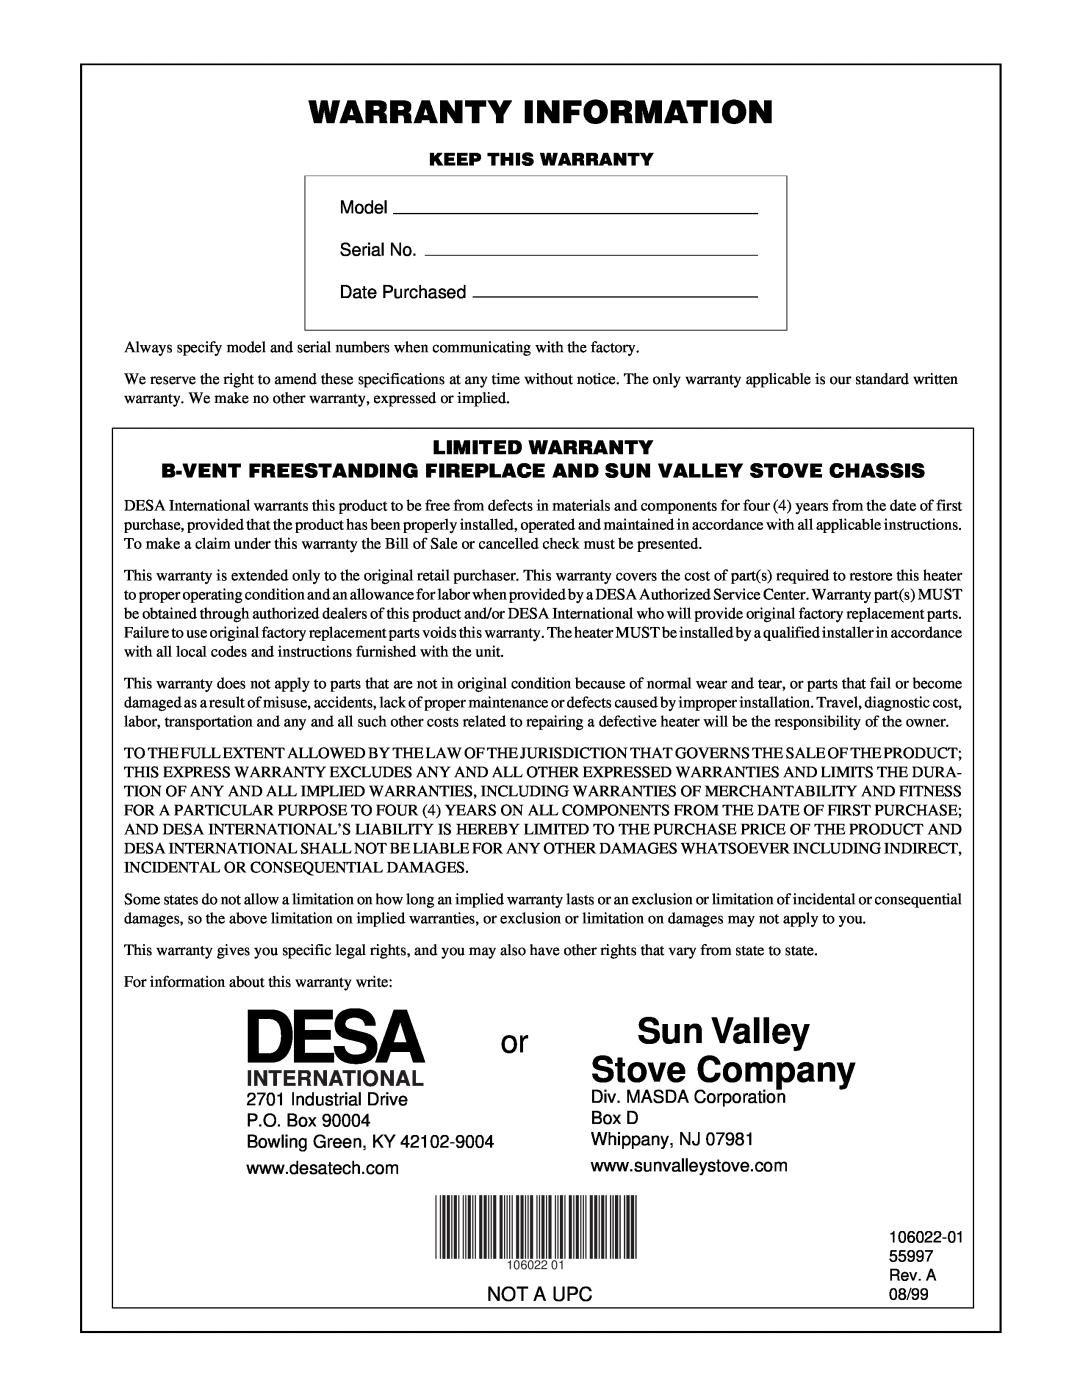 Desa MSBVBP Sun Valley, Stove Company, Warranty Information, International, Limited Warranty, Not A Upc, Industrial Drive 